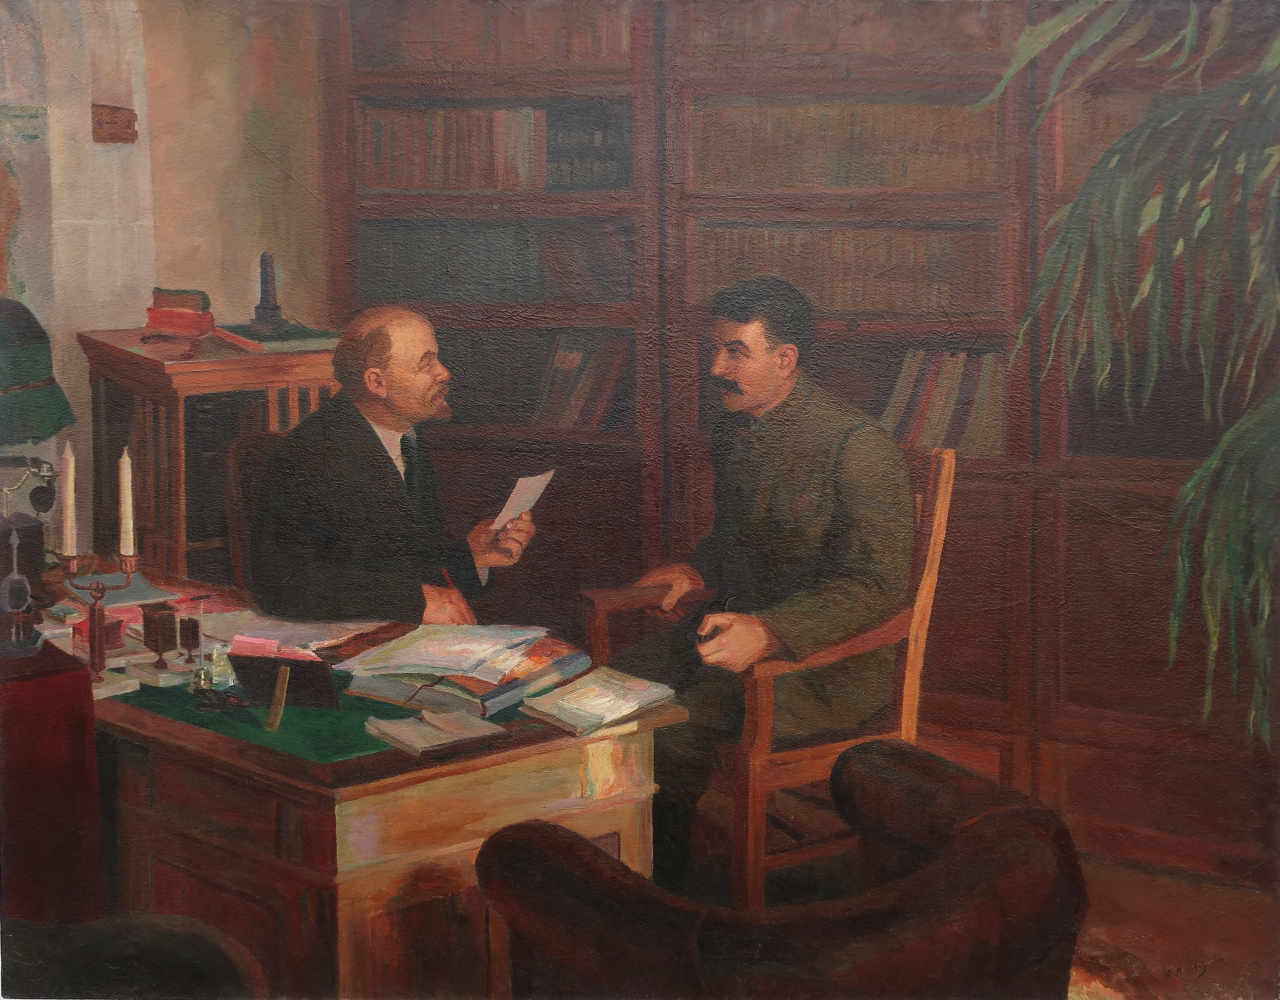 Ленин и Сталин 134-172 см., холст, масло 1946 год